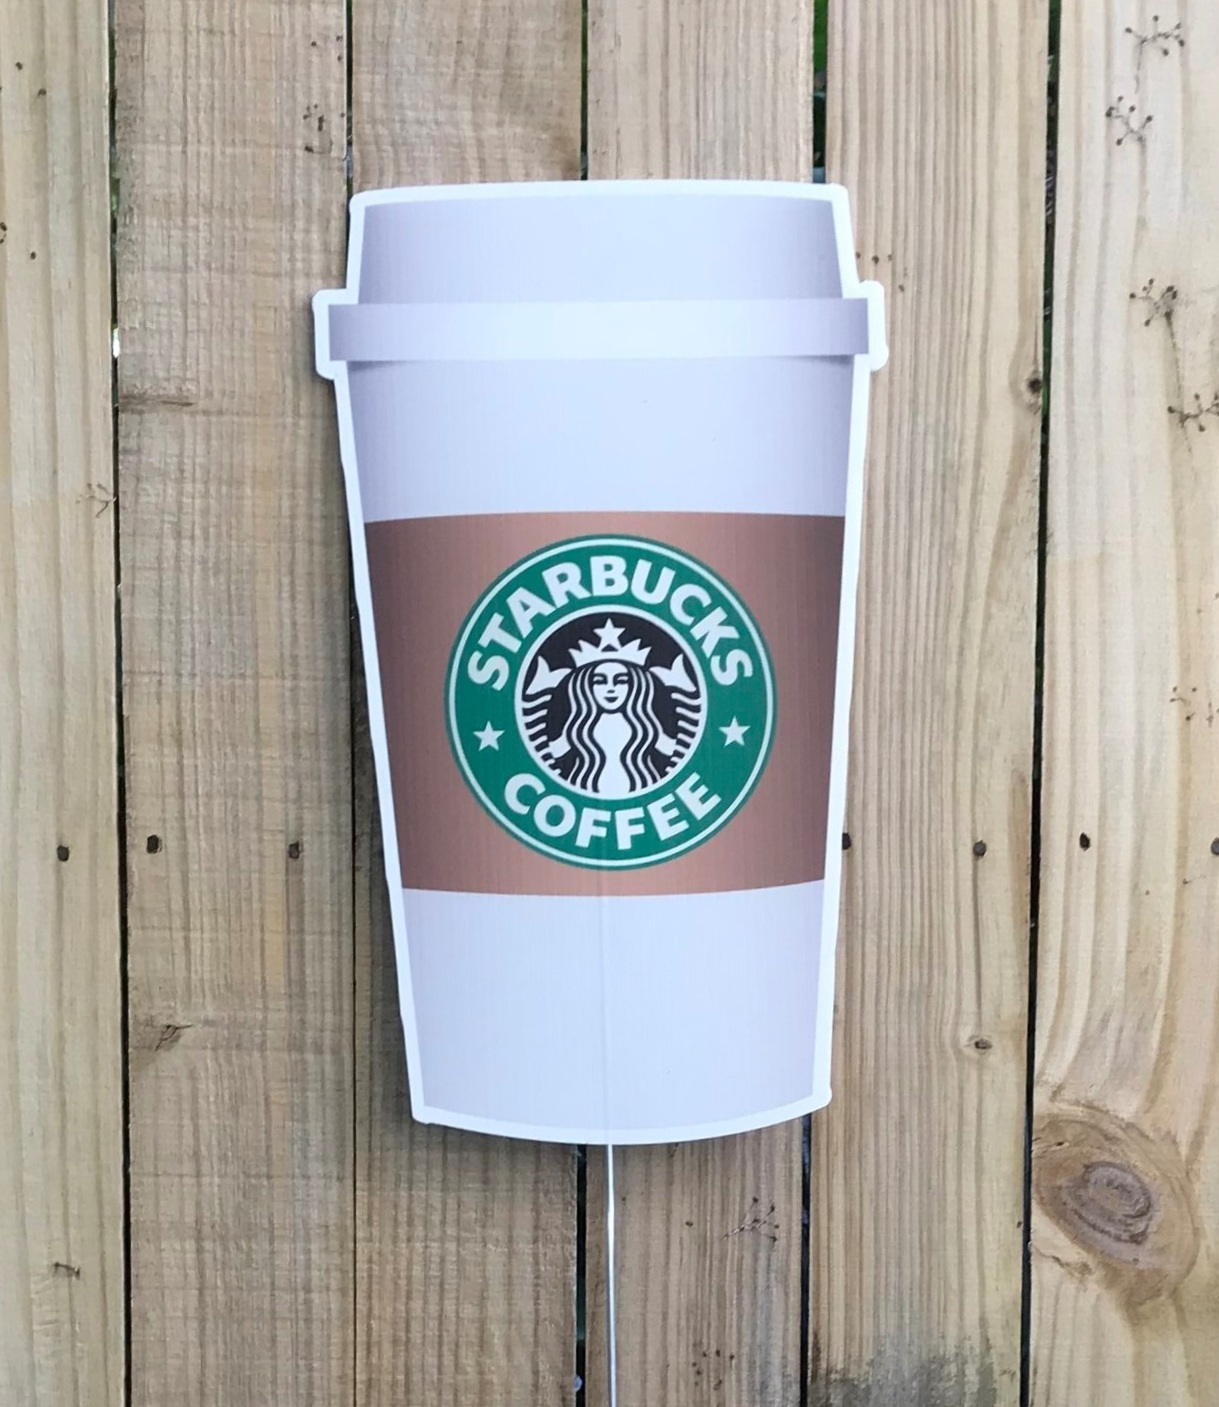 Starbucks Coffee Cup.jpg